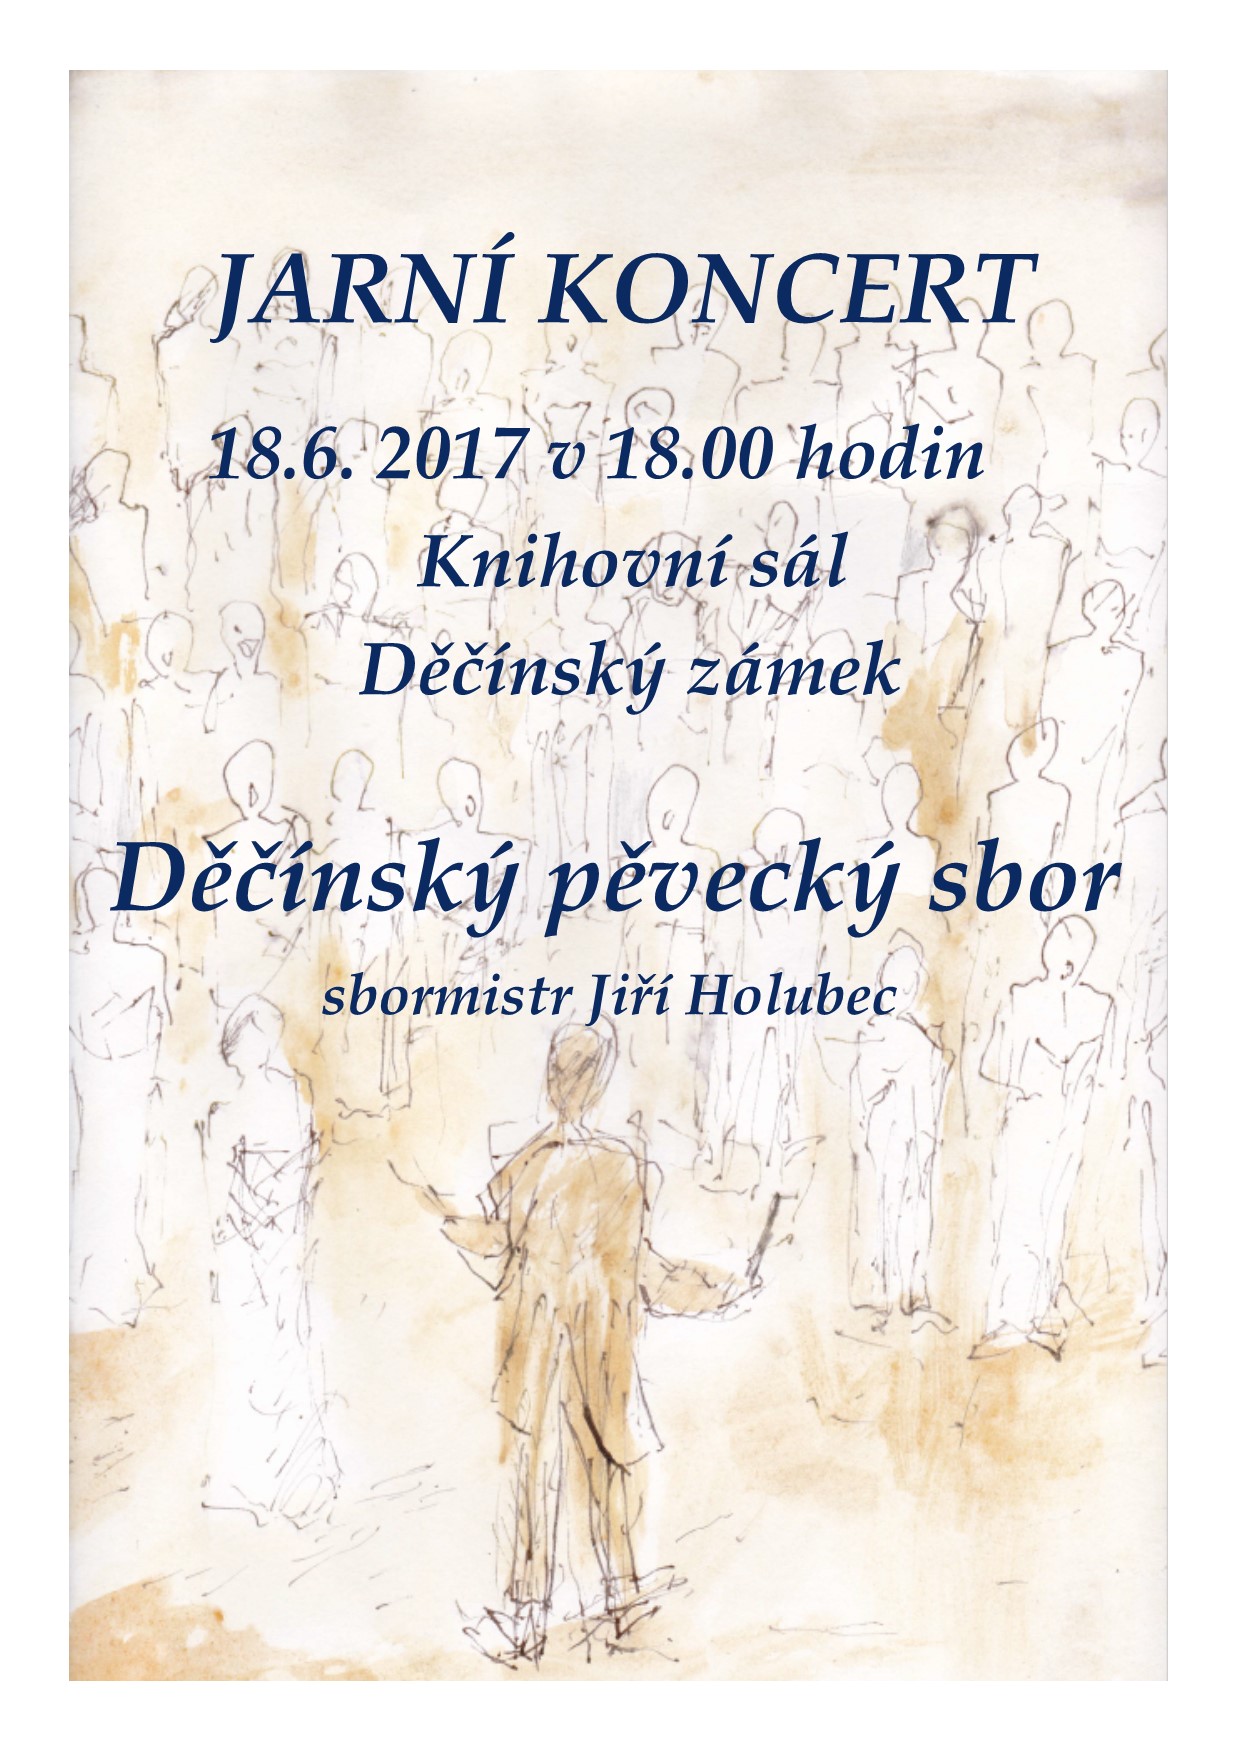 Jarn koncert